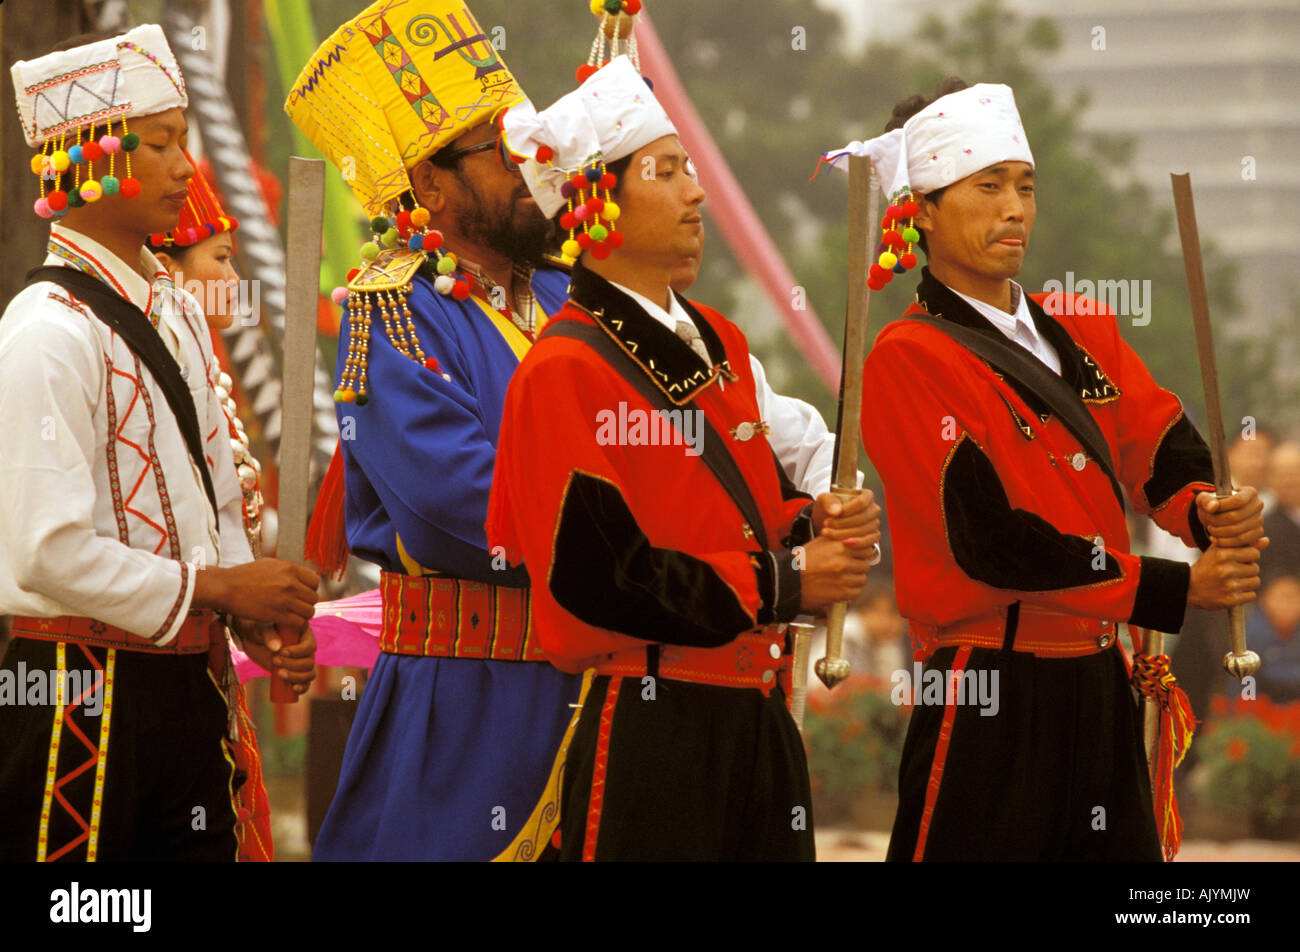 En Asia, China, Pekín. Cultura Parque étnico chino, Marching Band, Jingpo trajes étnicos Foto de stock